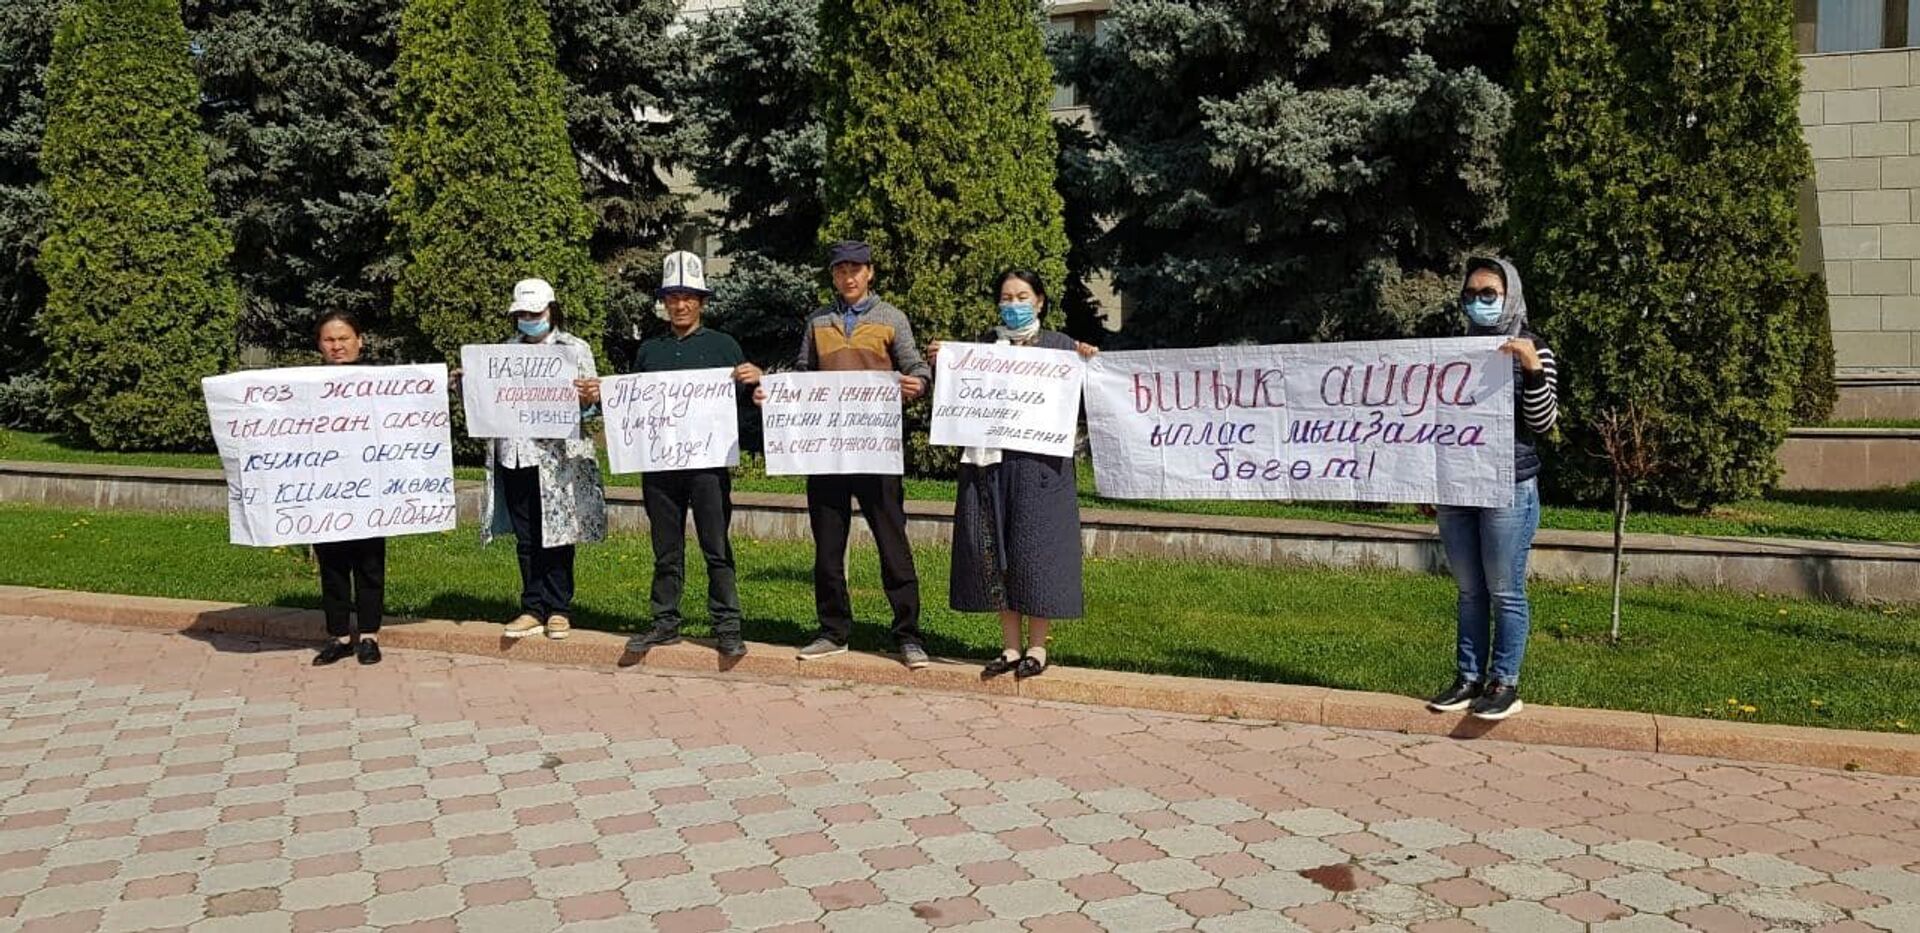 Митинг против легализации казино в центре Бишкека - Sputnik Кыргызстан, 1920, 16.12.2021